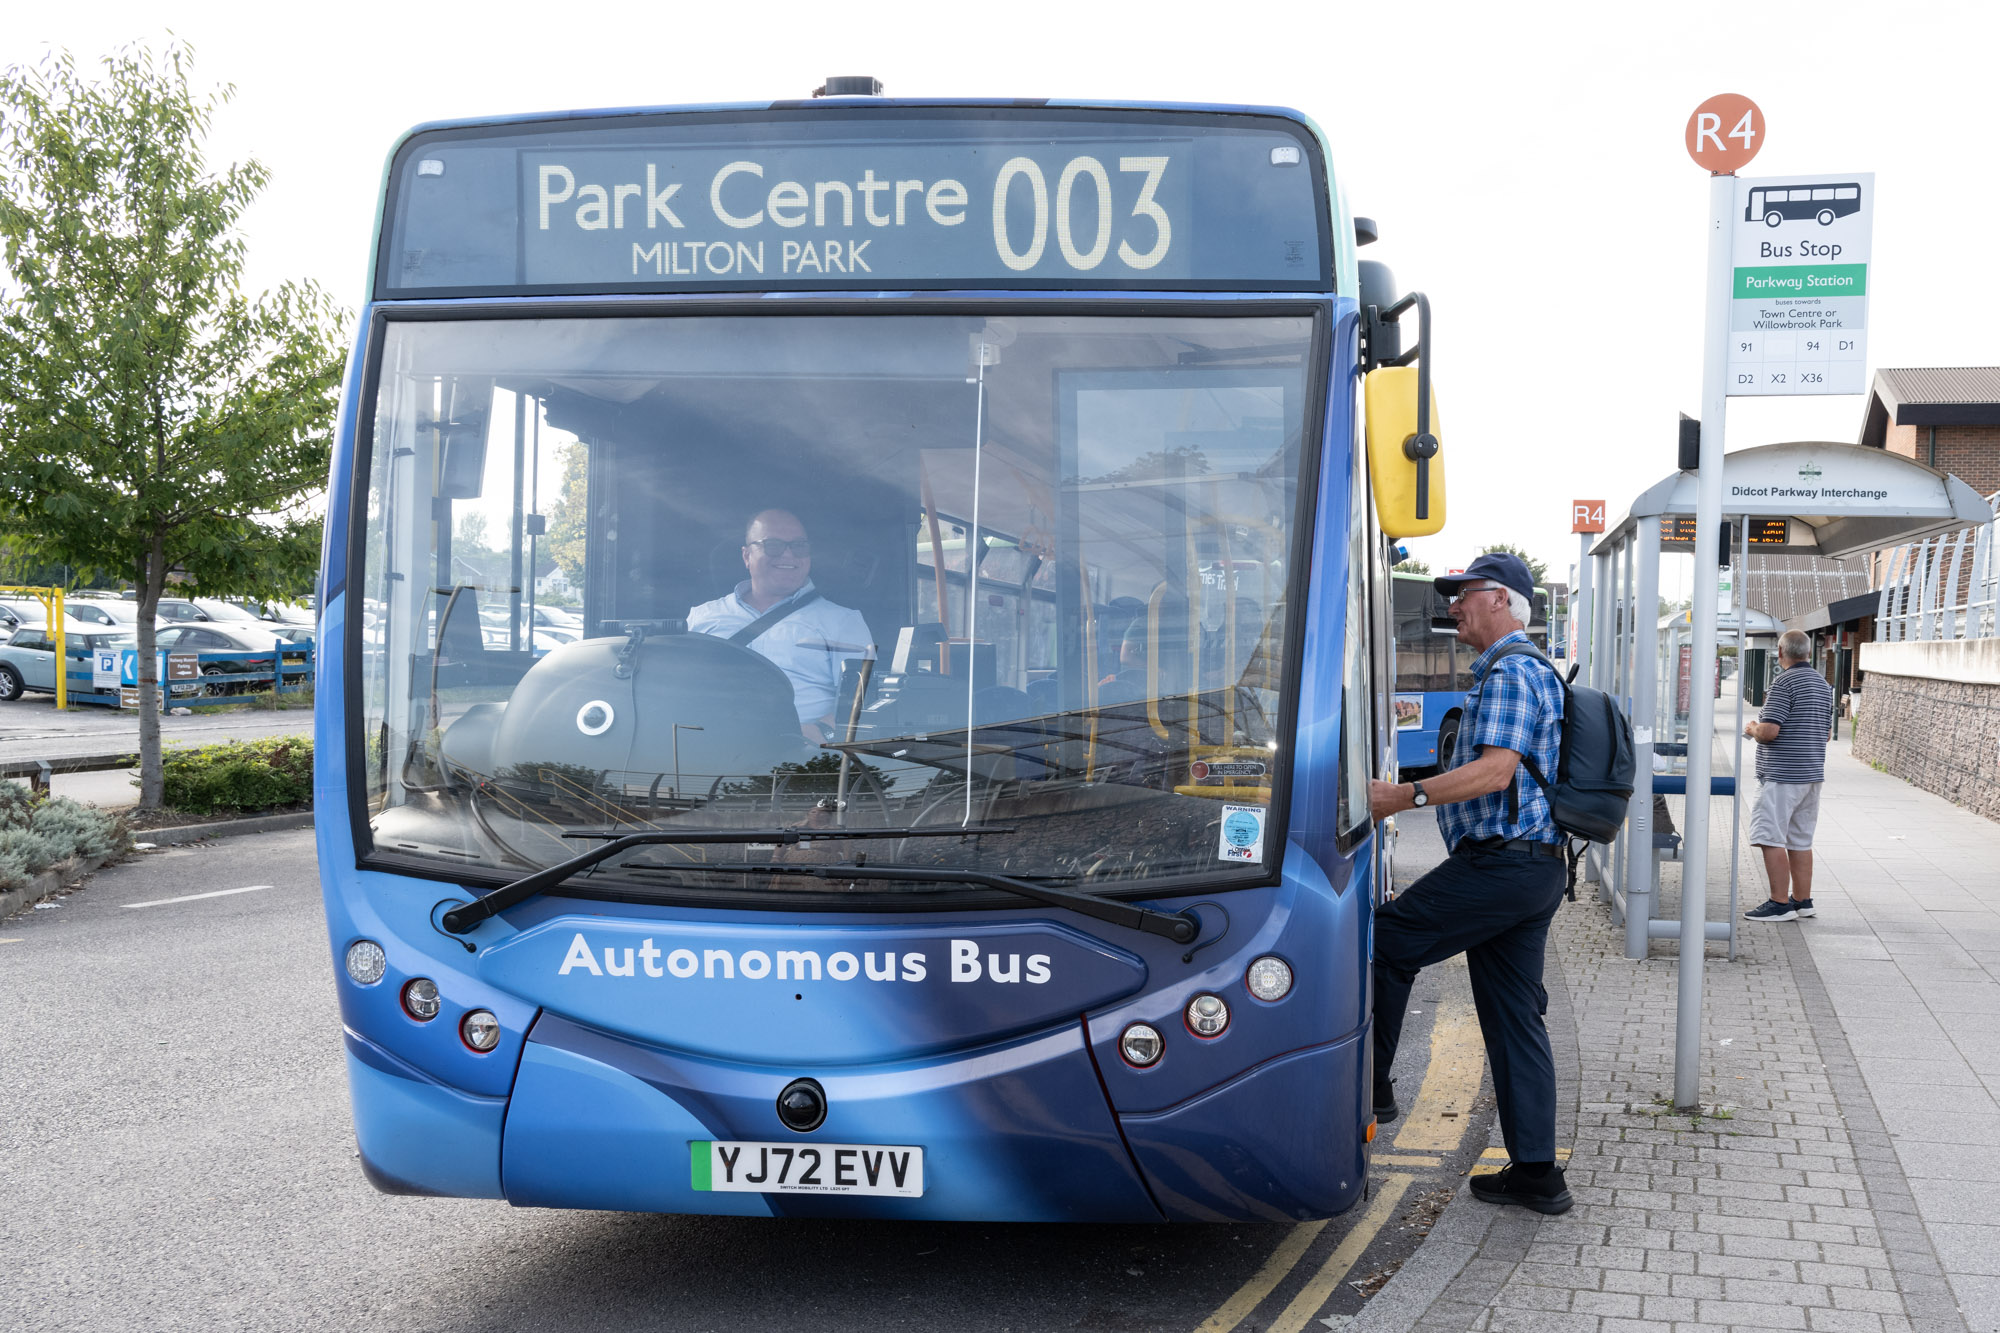 UK’s first full-size, autonomous zero-emission bus on roads